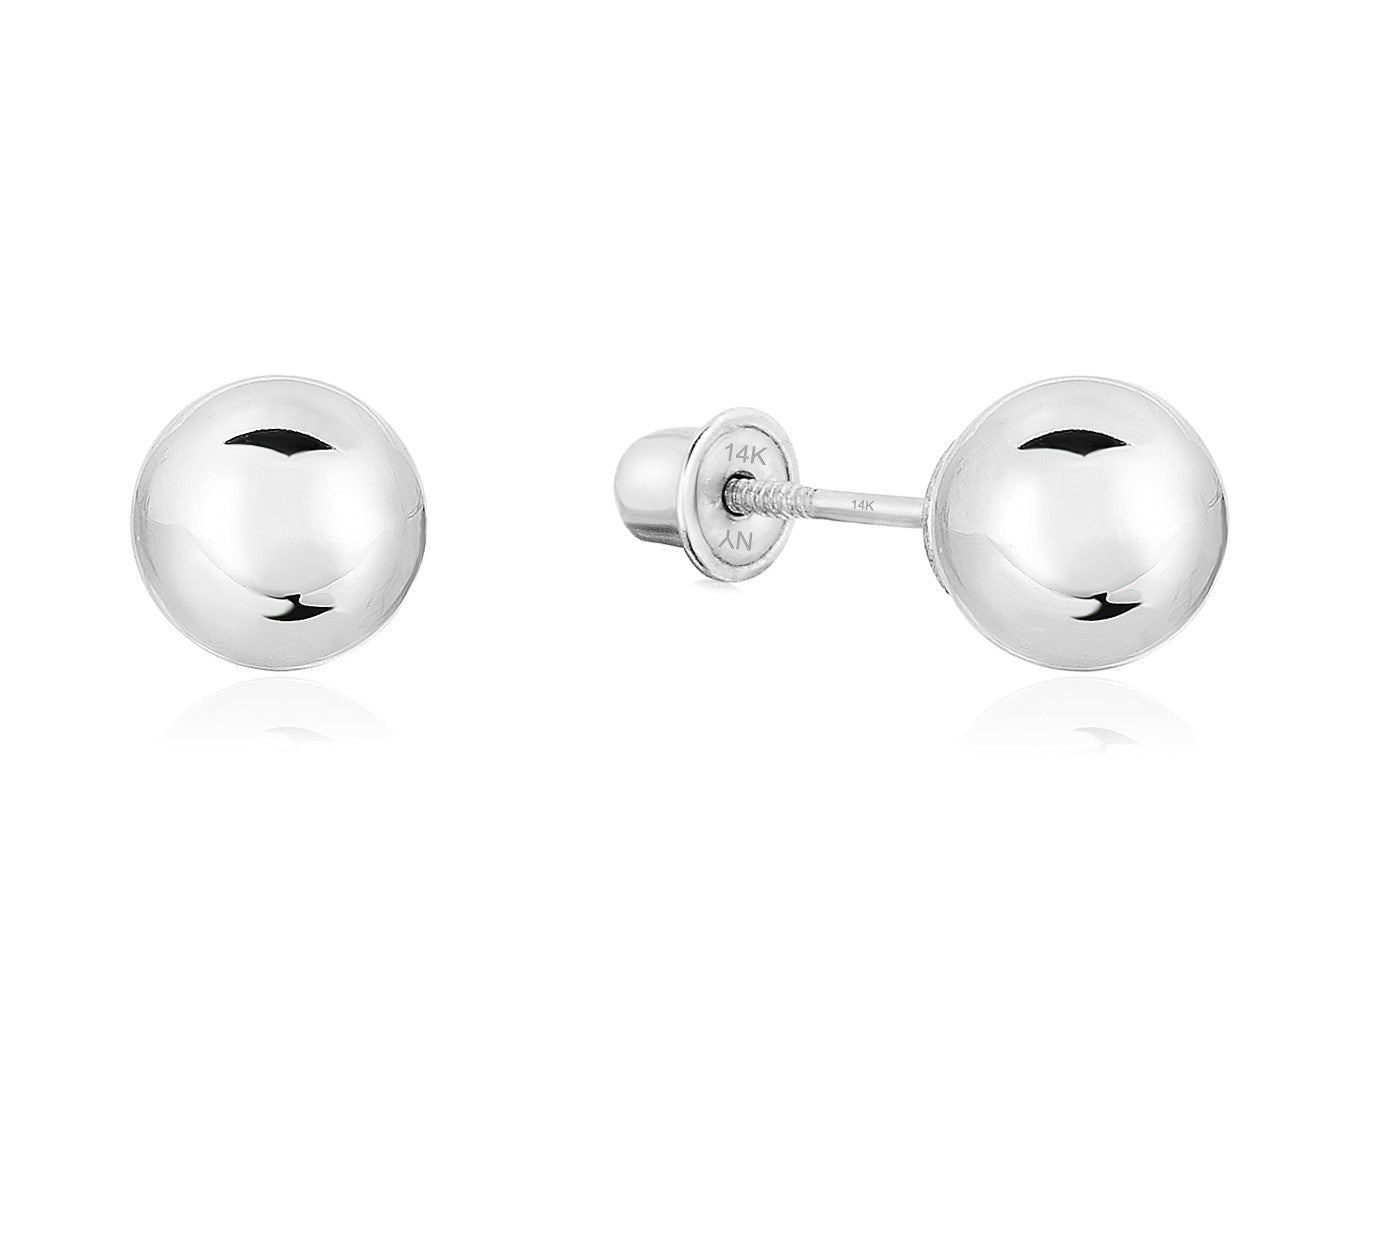 14K White Gold Classic Ball Stud Earrings with Screwbacks (Unisex) 3mm